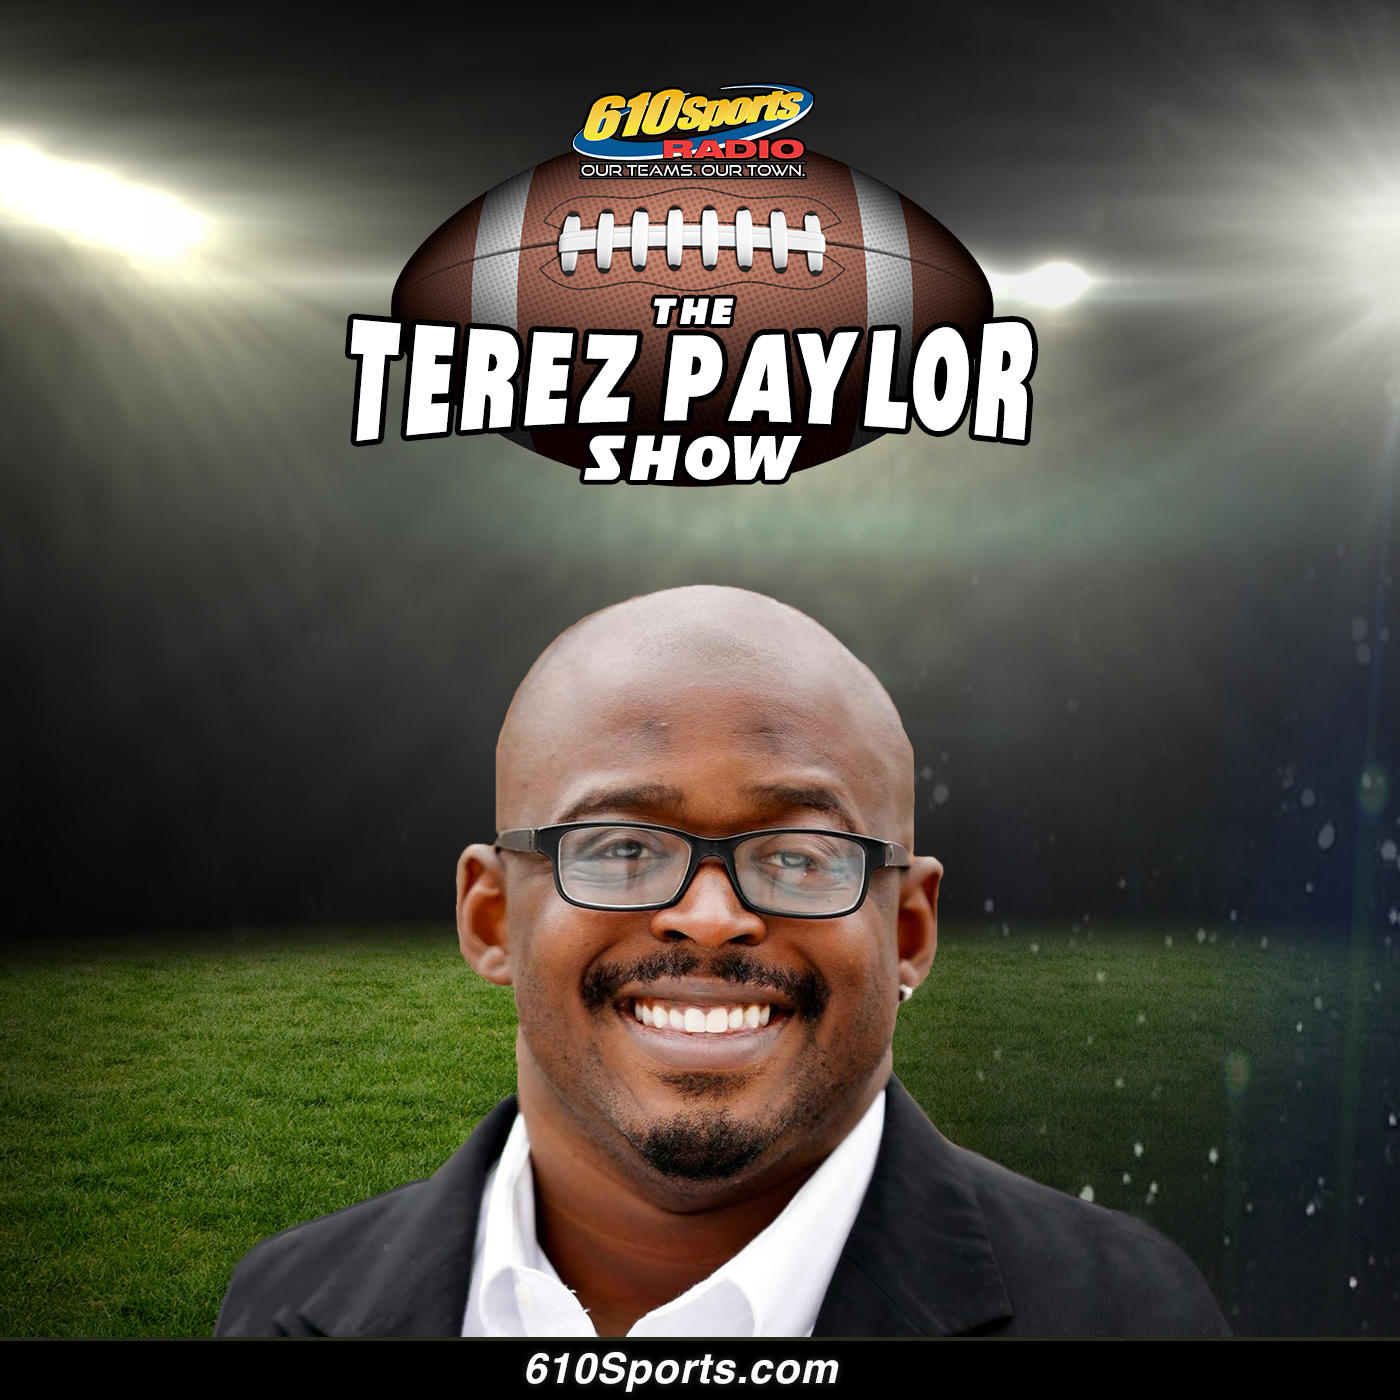 1/25/21 - The Terez Paylor Show